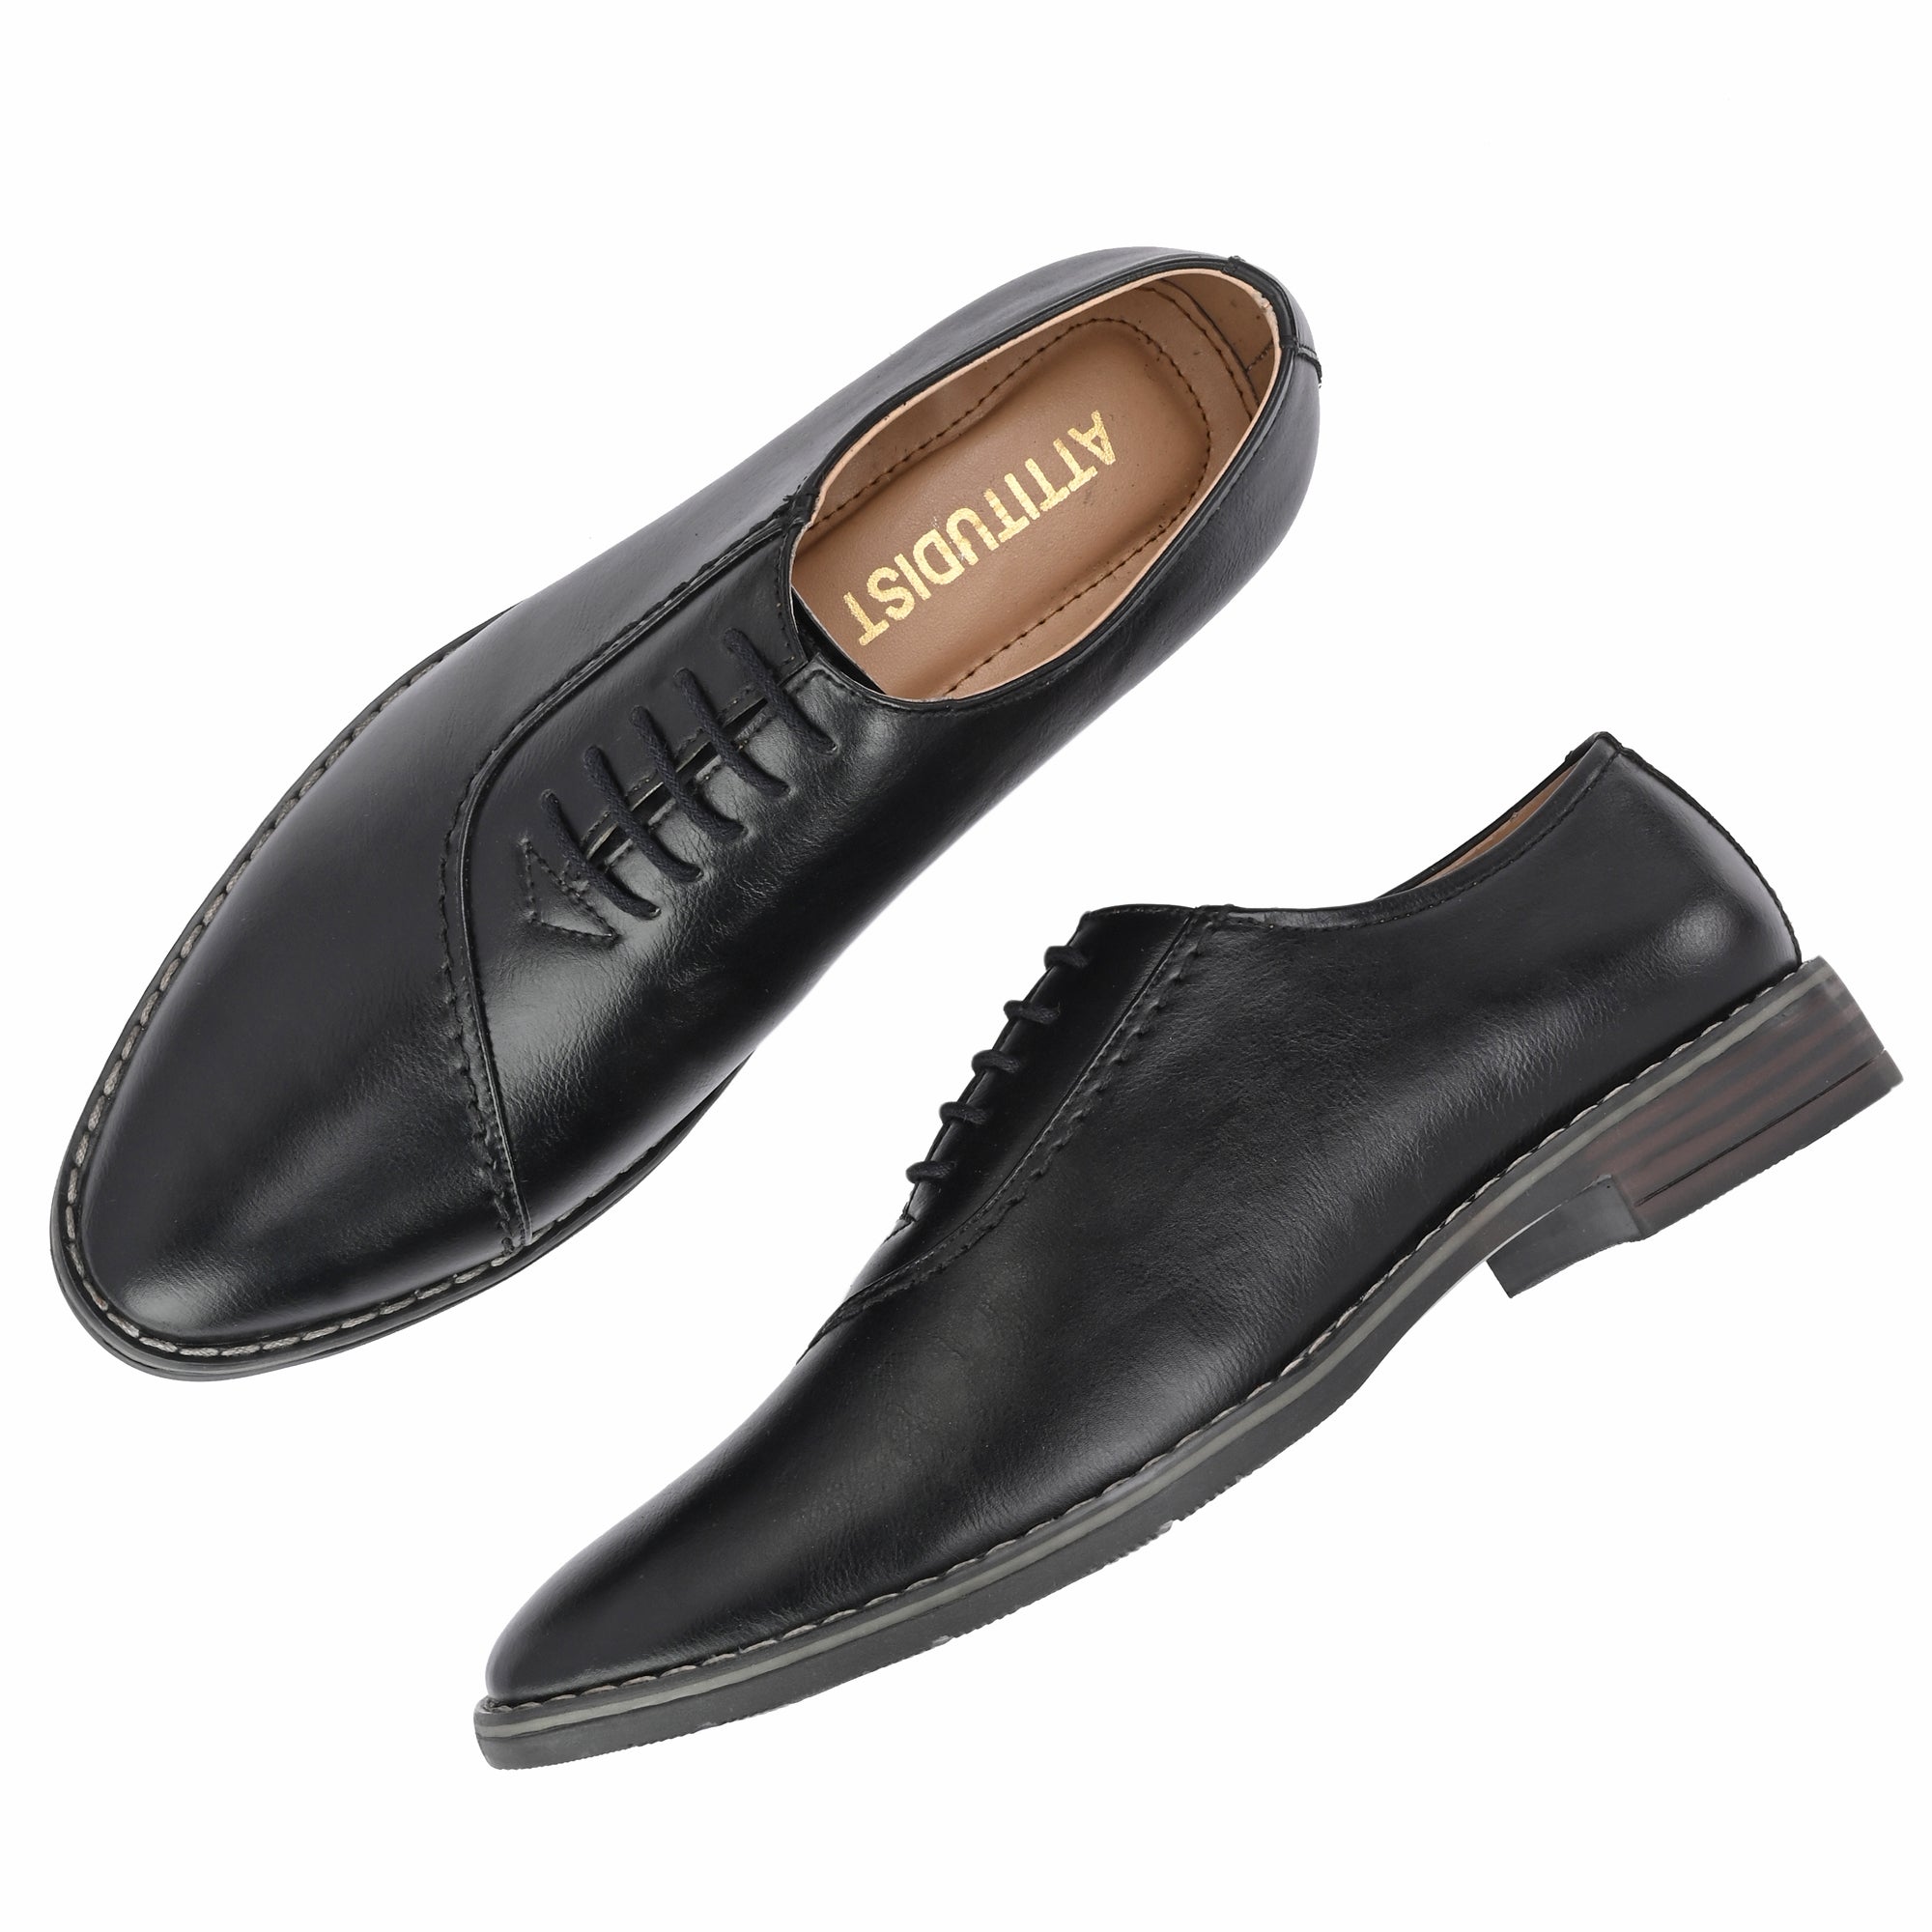 black-formal-lace-up-attitudist-shoes-for-men-with-design-sp5a